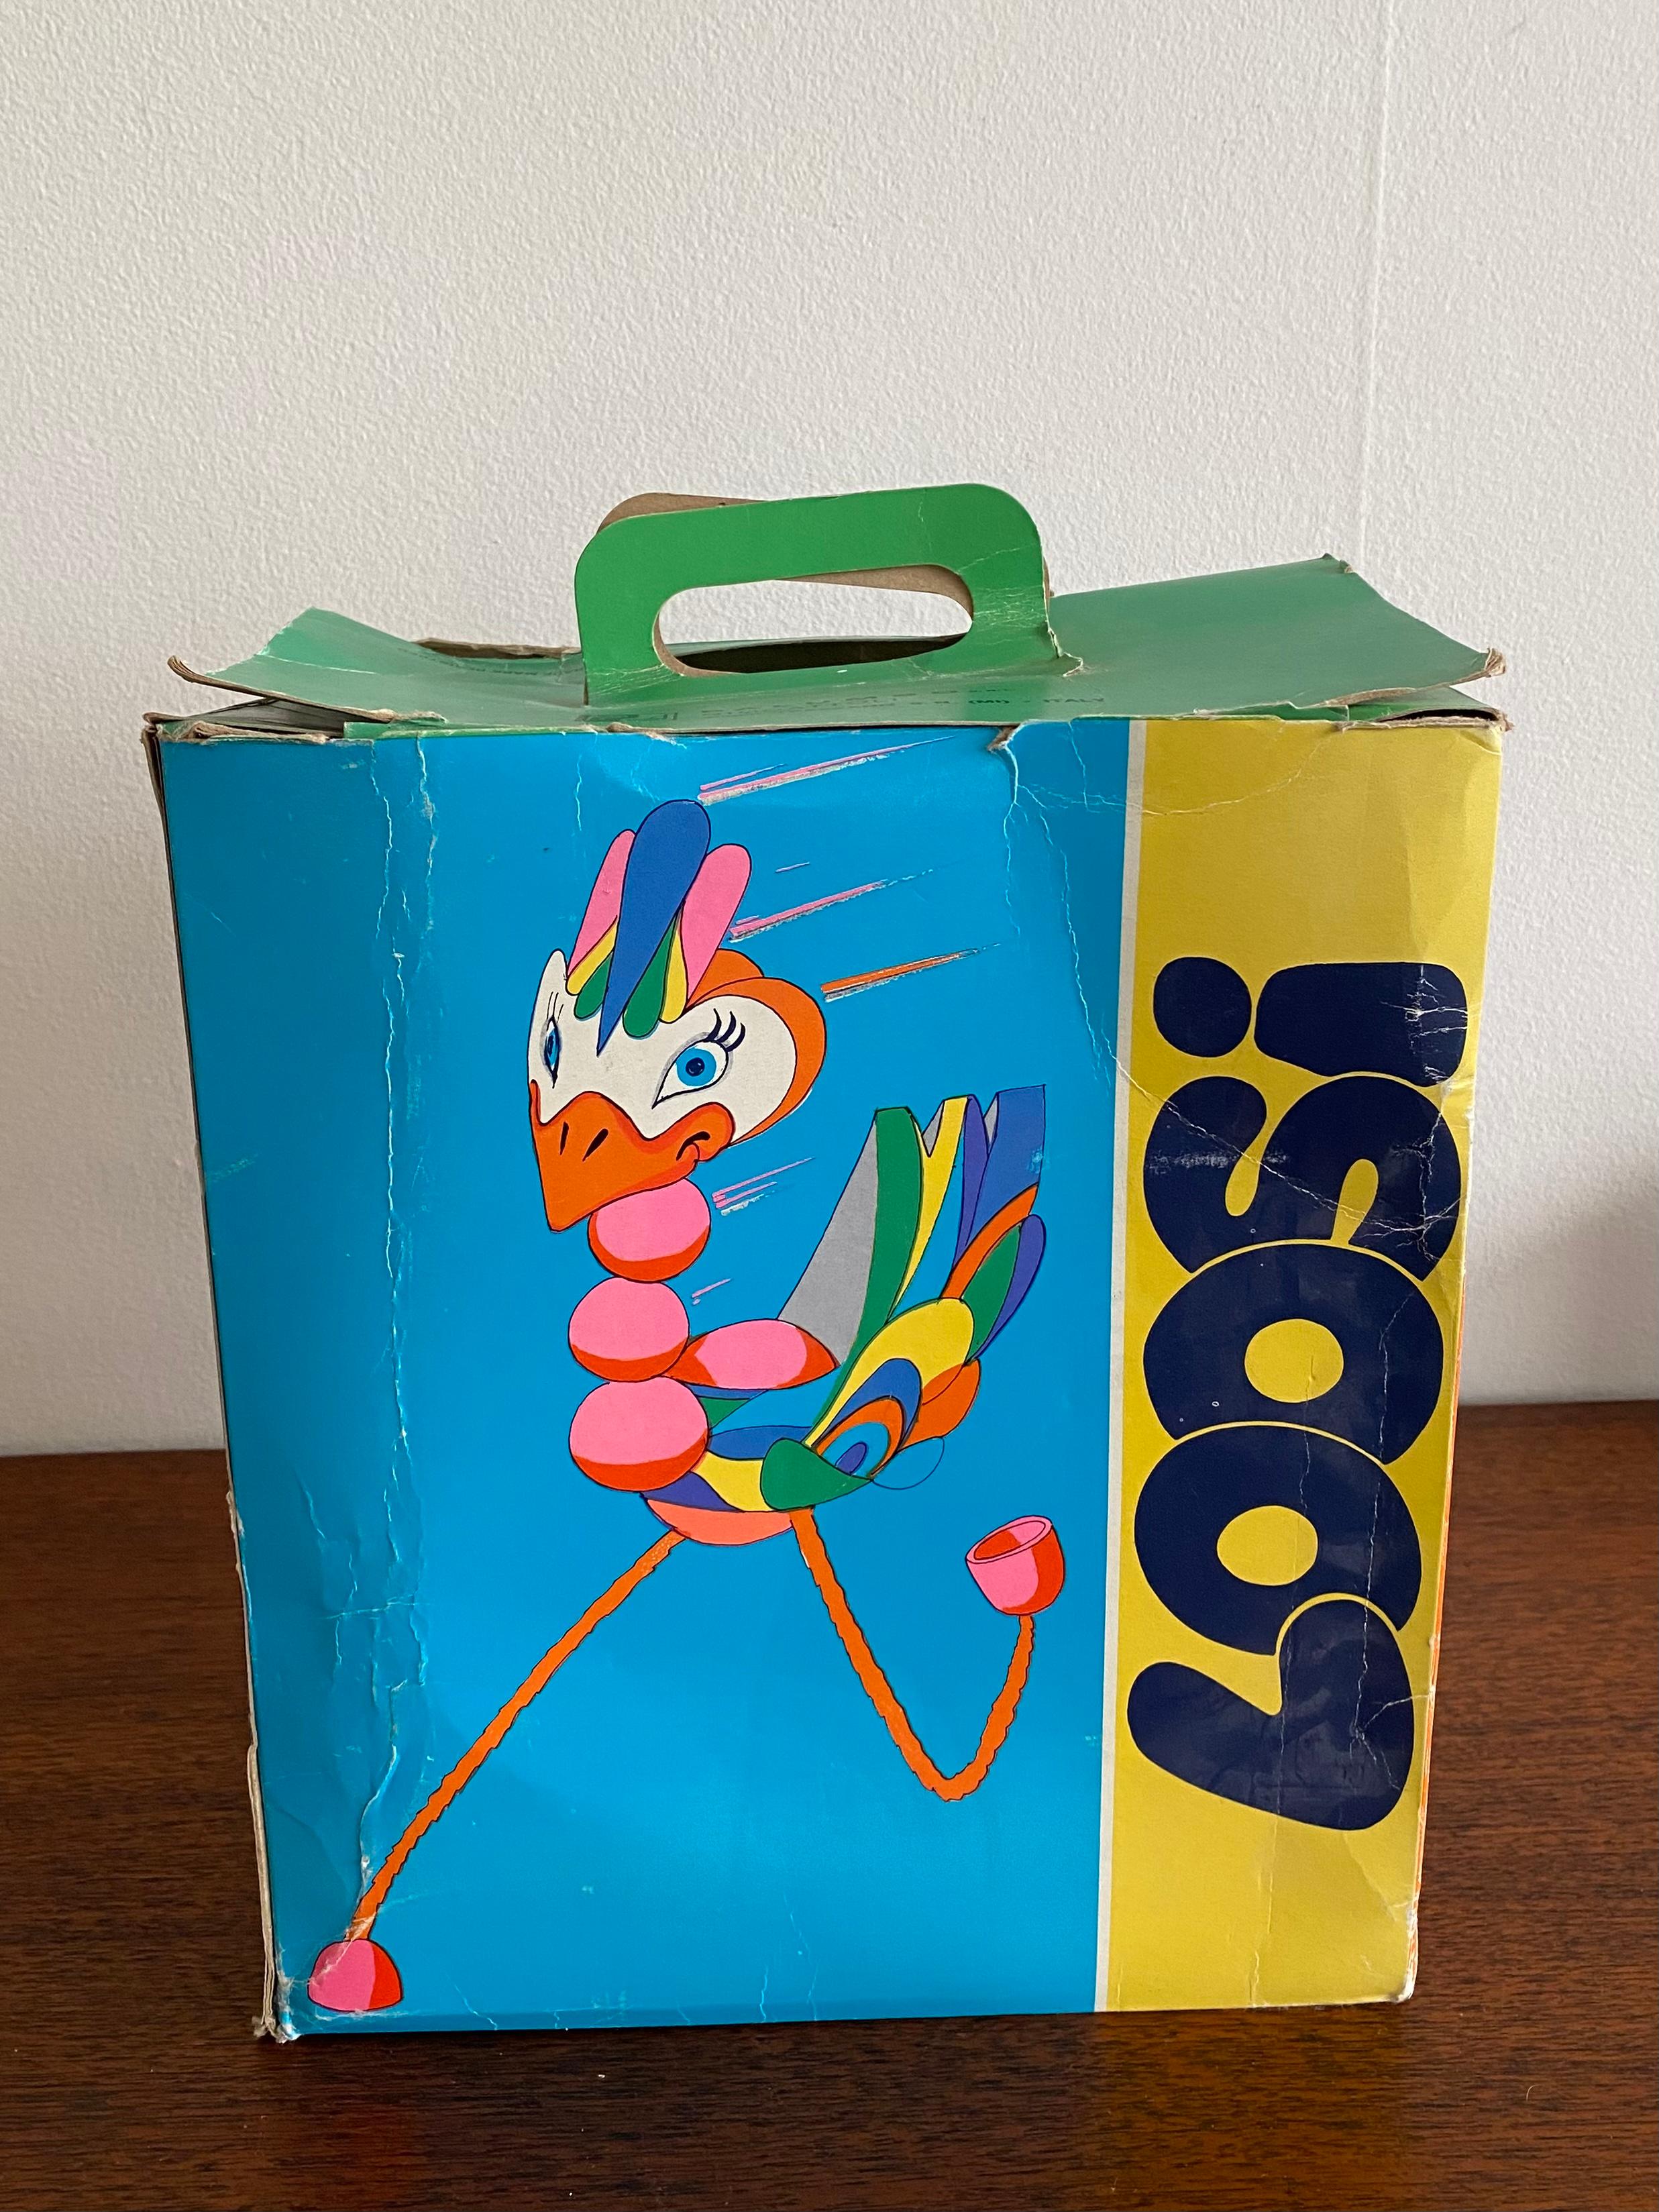 Loosi Goosi Marionette Bird by Palumbo Giocattoli, 1970s For Sale 3